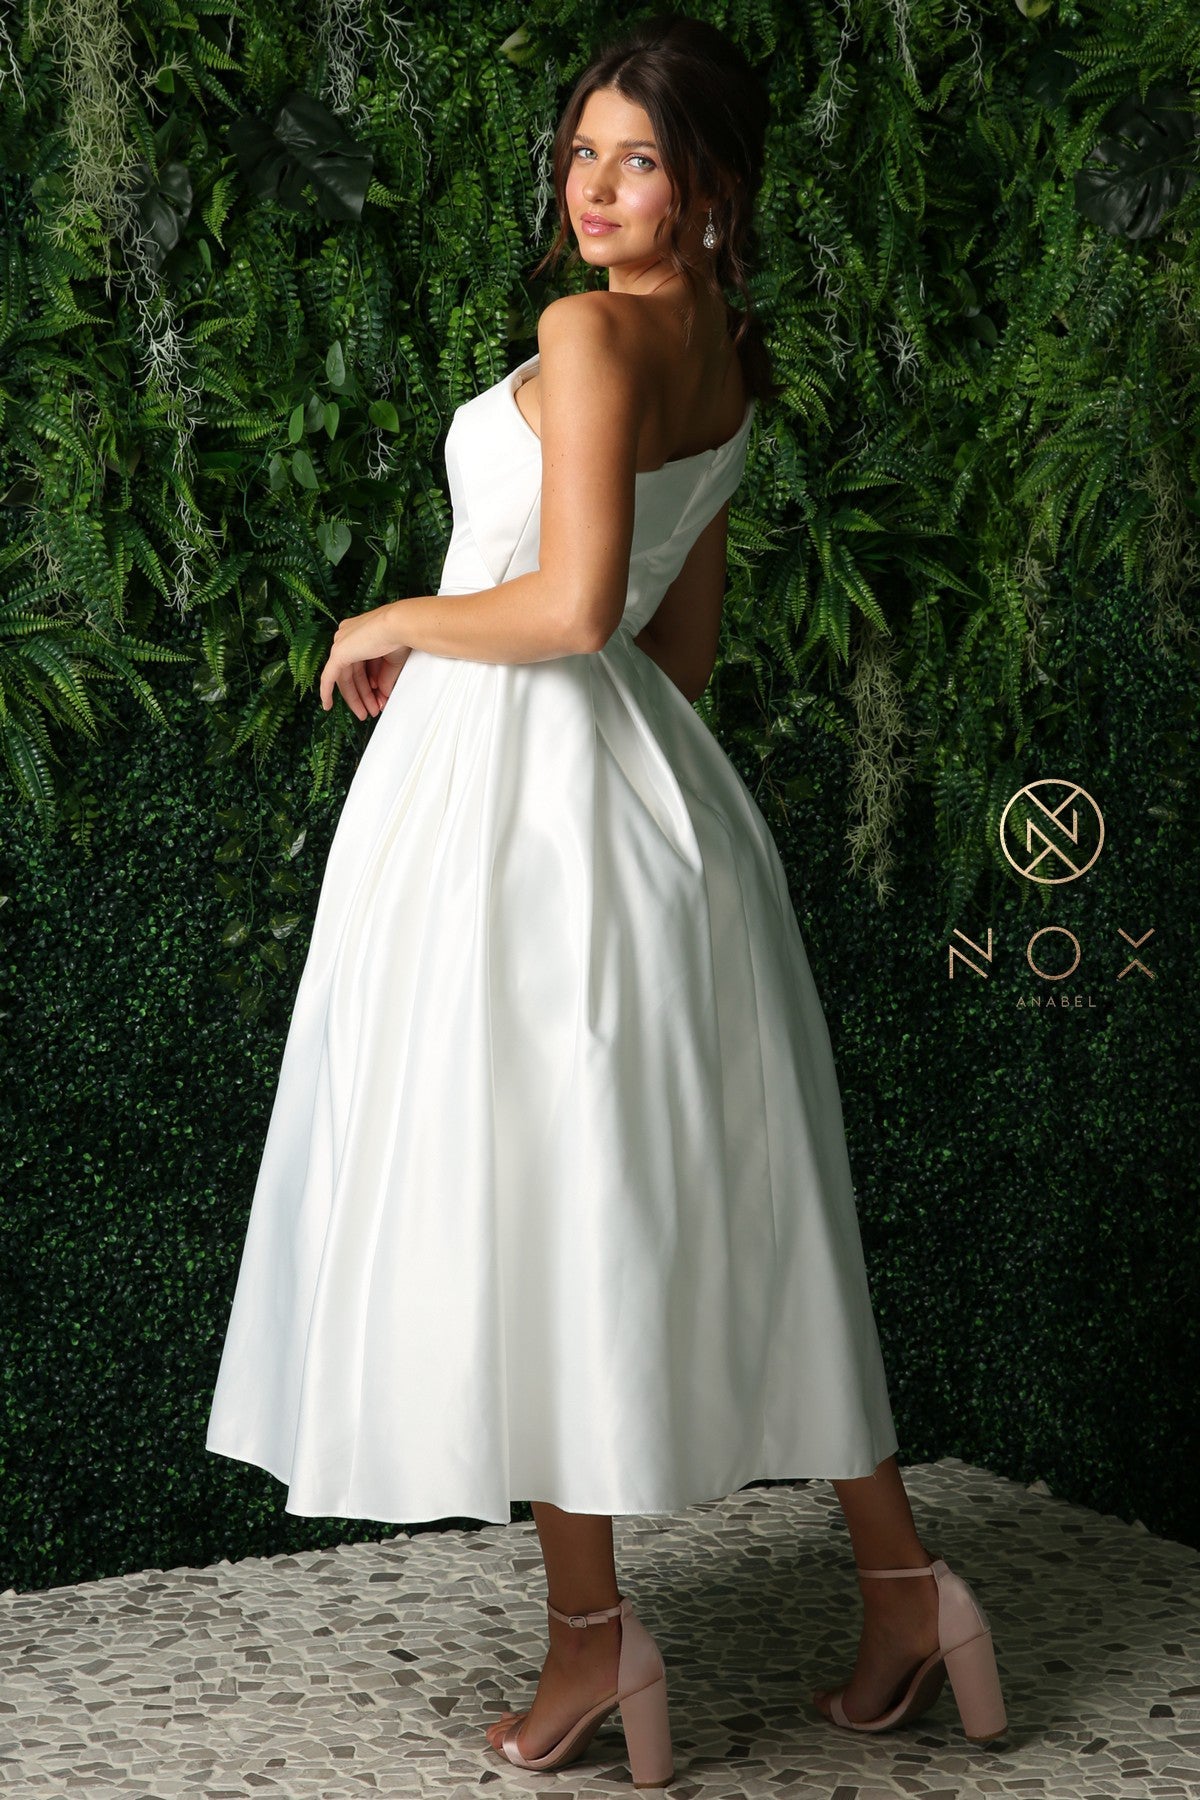 128.99] Elegant White Tea Length Party Dress With Sleeves #MX17009 -  GemGrace.com | Senior prom dresses, Party dresses with sleeves, White long  sleeve prom dress